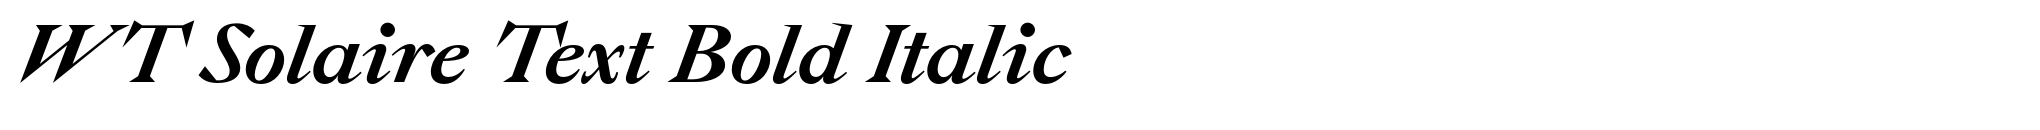 WT Solaire Text Bold Italic image